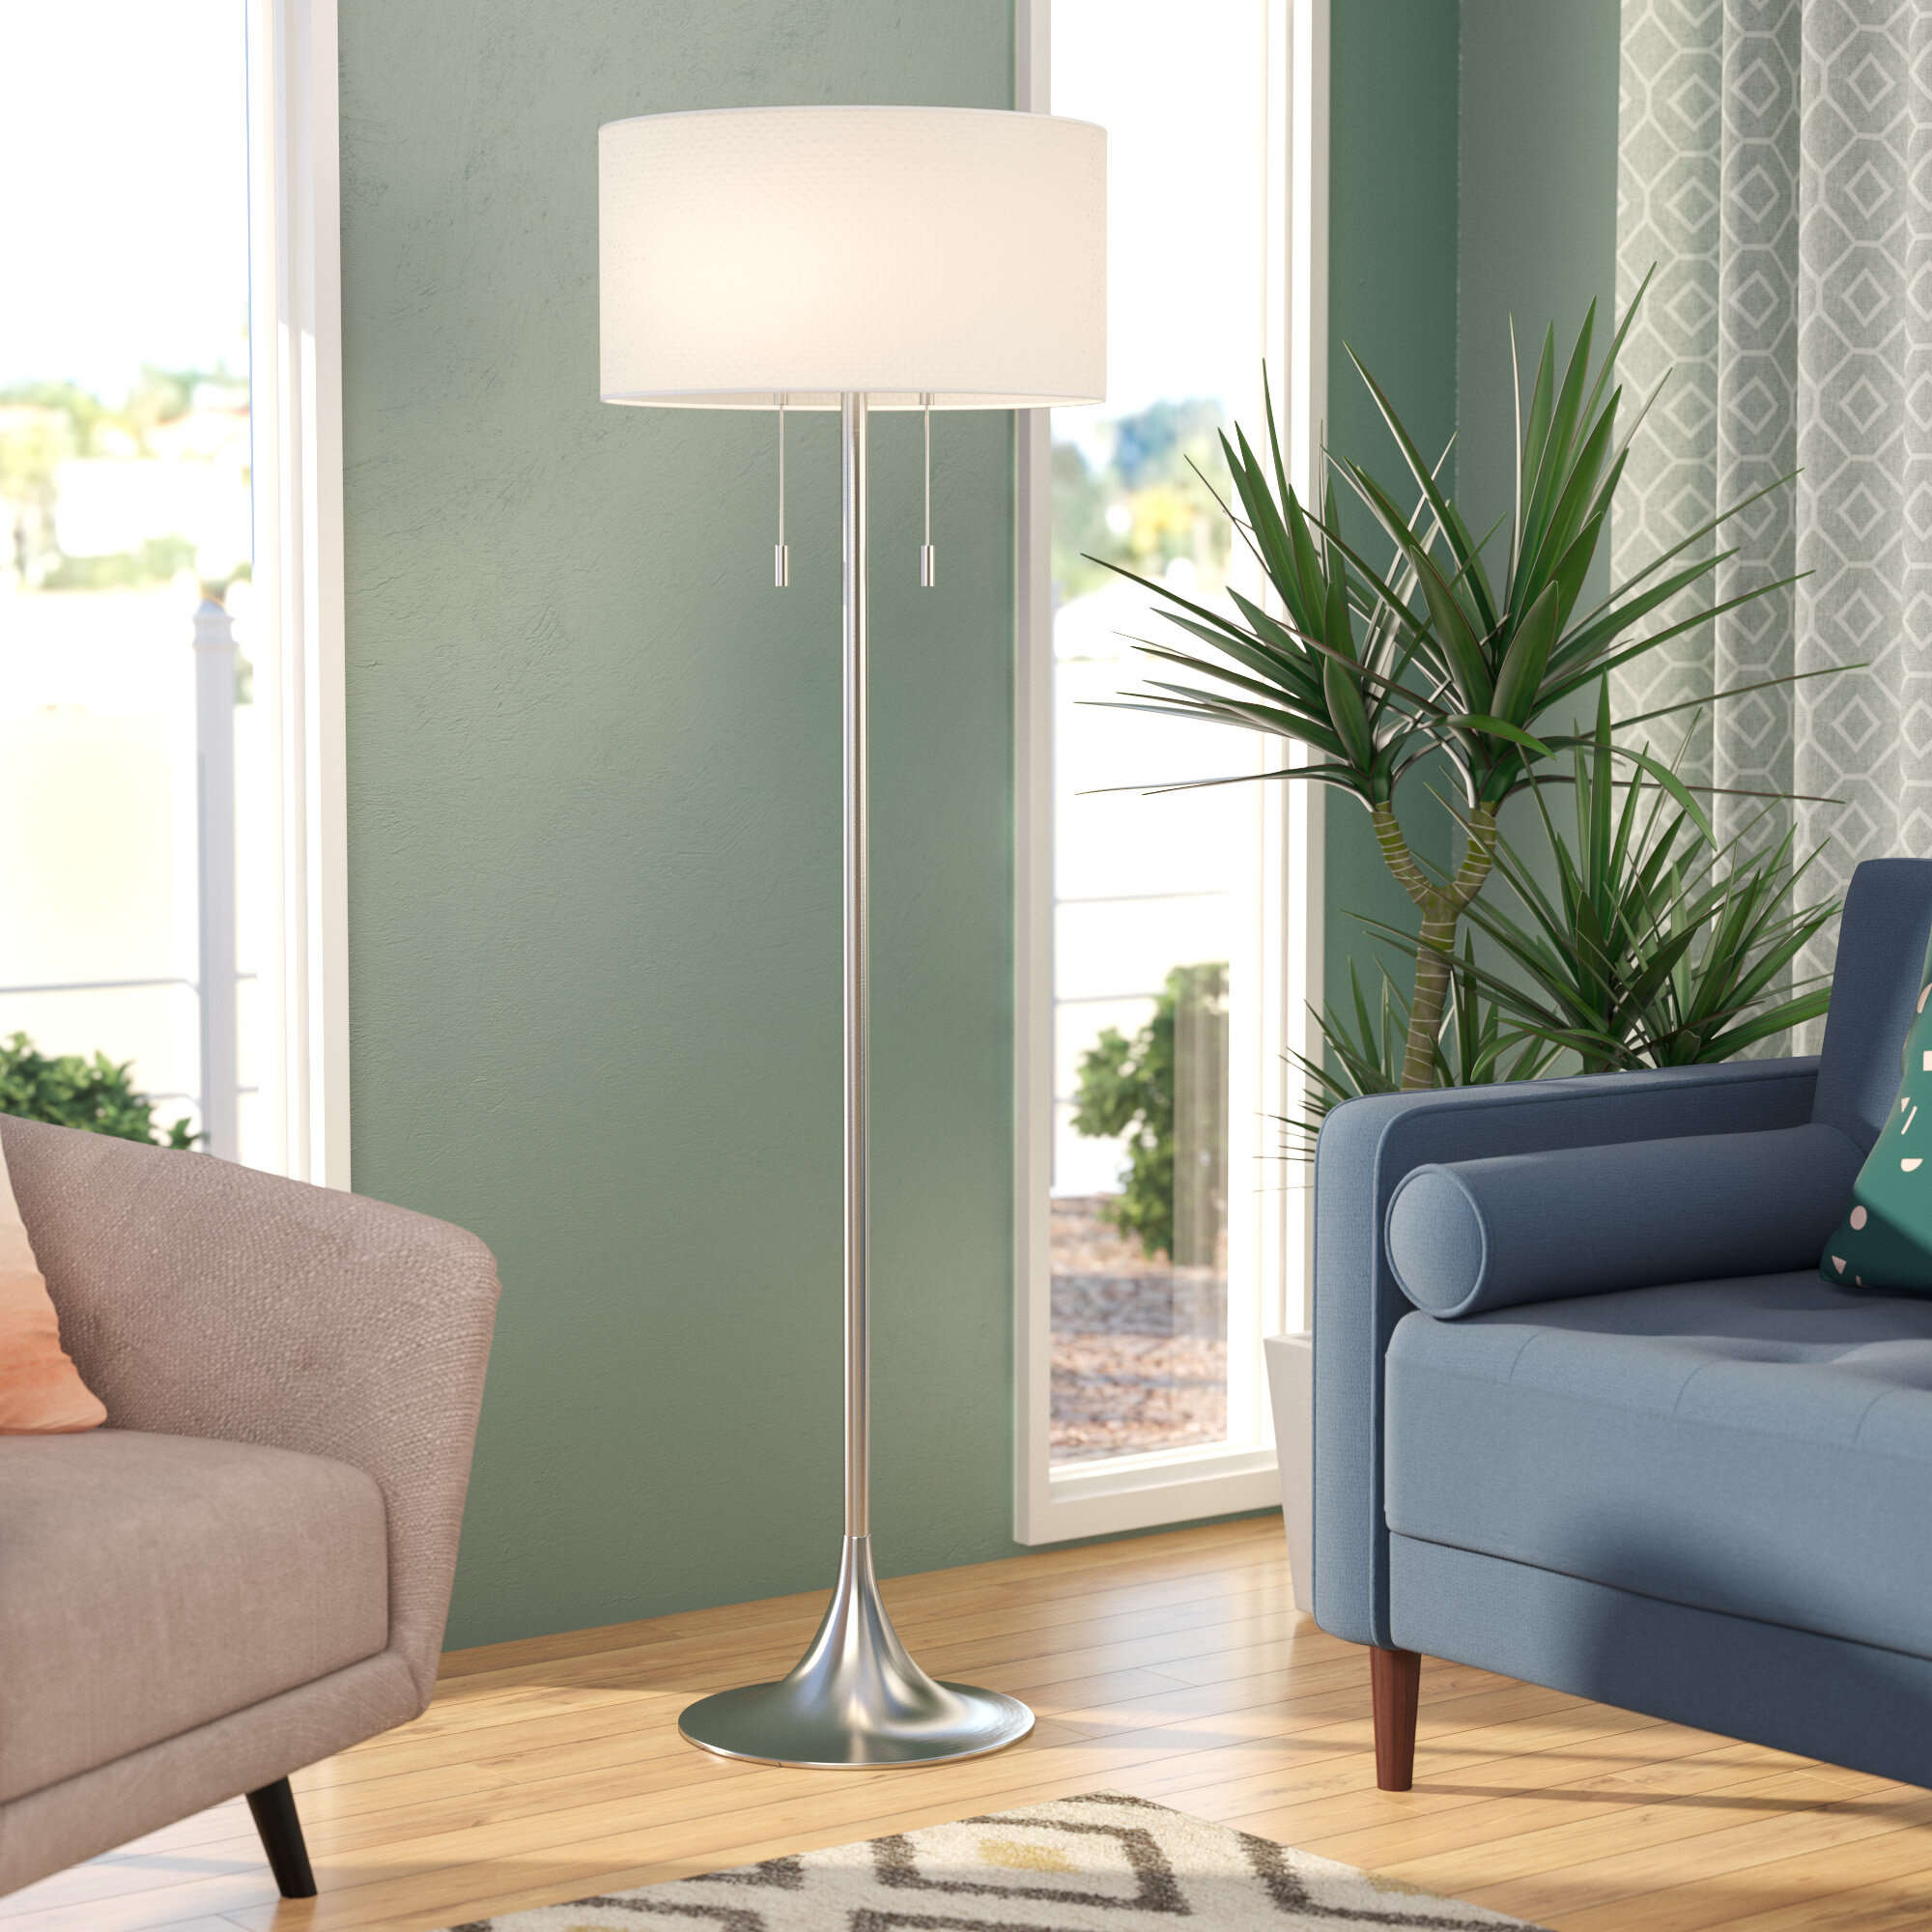 Floor Lamp Ideas For Living Room Small Lighting Design regarding size 2000 X 2000